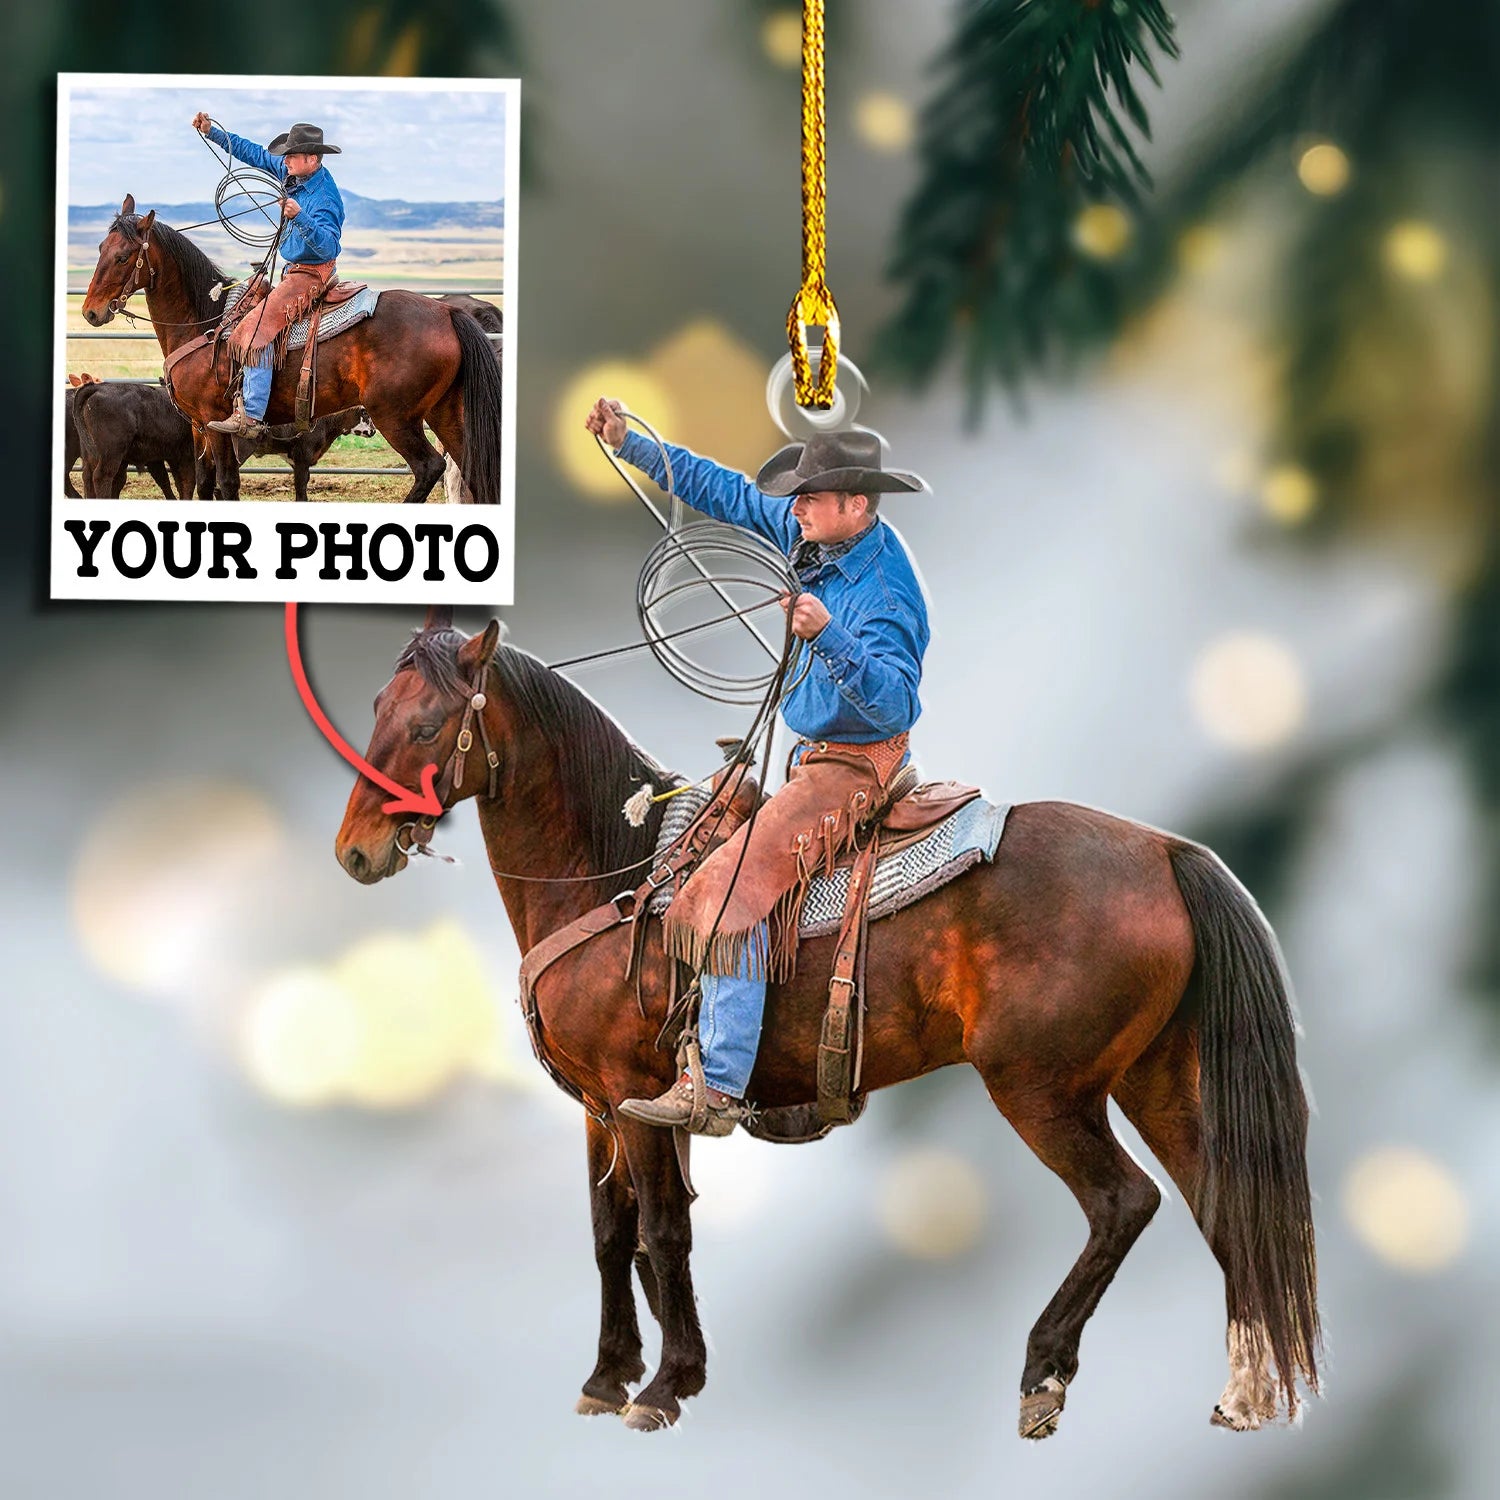 Custom Photo Ornament Gift For Cowboys - Personalized Photo Ornament Gift For Horse Lovers - Christmas Cowboys Ornament